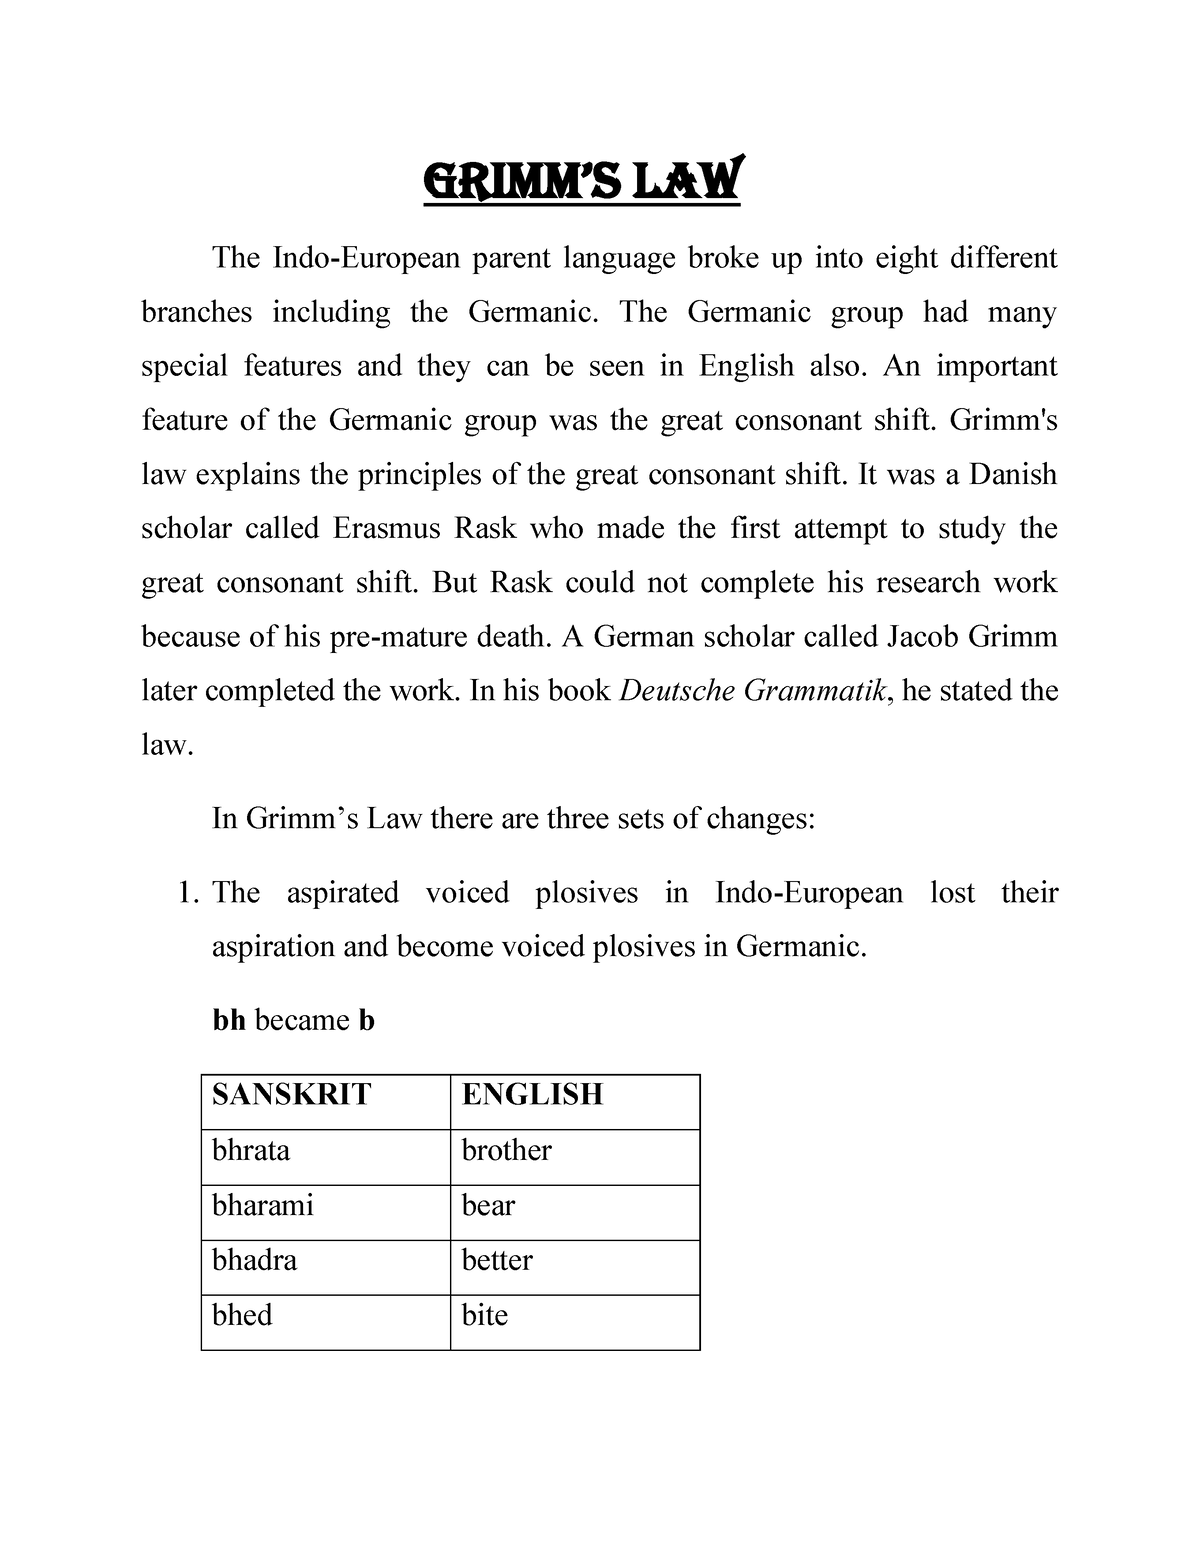 grimm's law essay